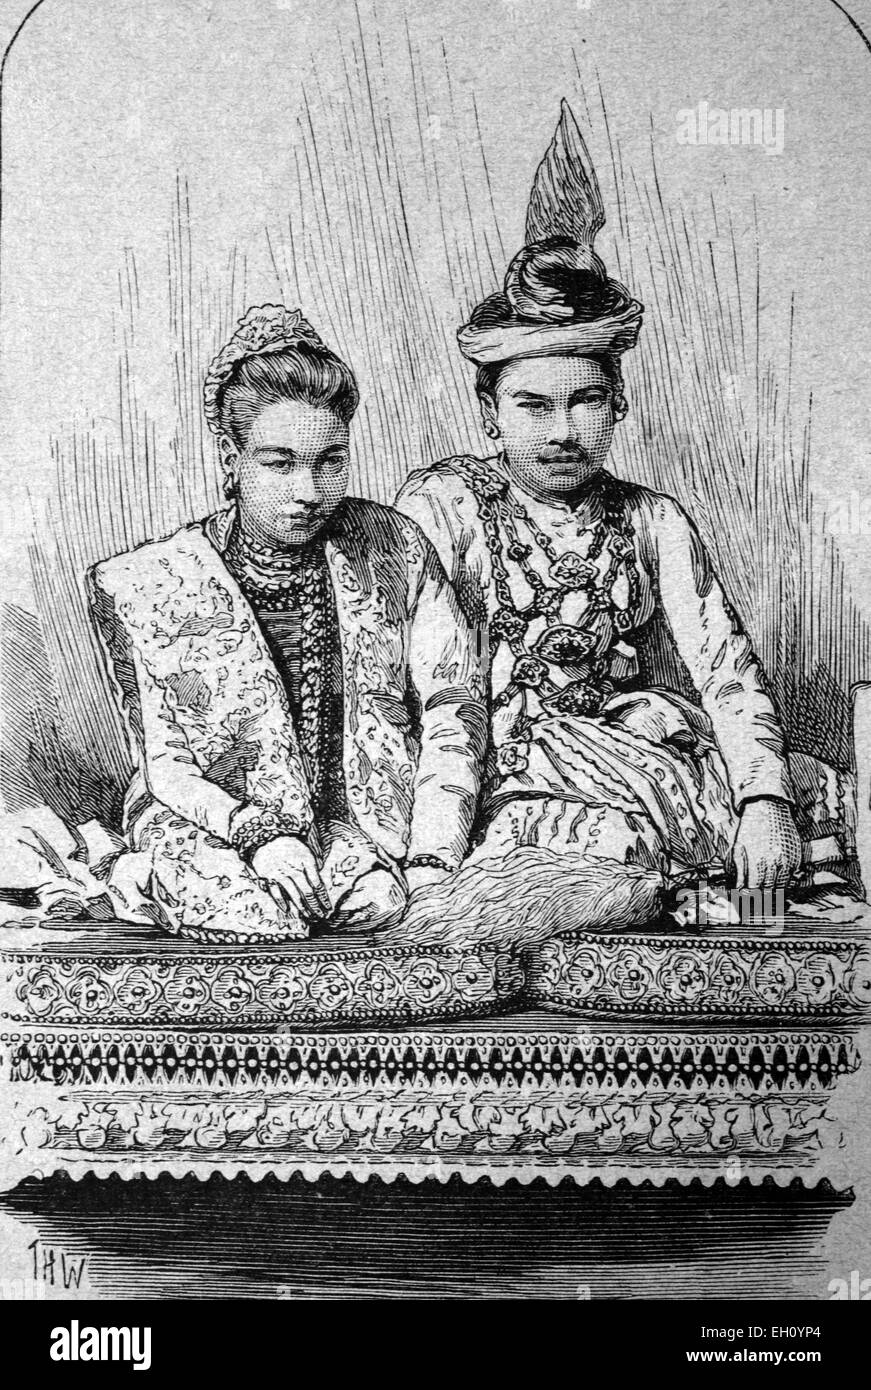 Queen Supayalat and King Thibaw Min, Burma, historical illustration, circa 1886 Stock Photo